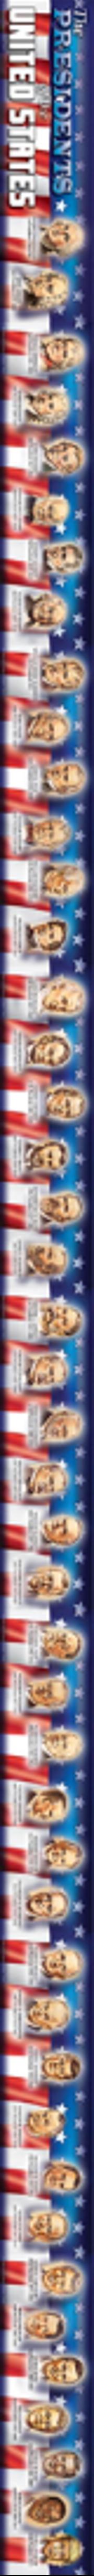 Presidents of the United States Mini Bulletin Board Set